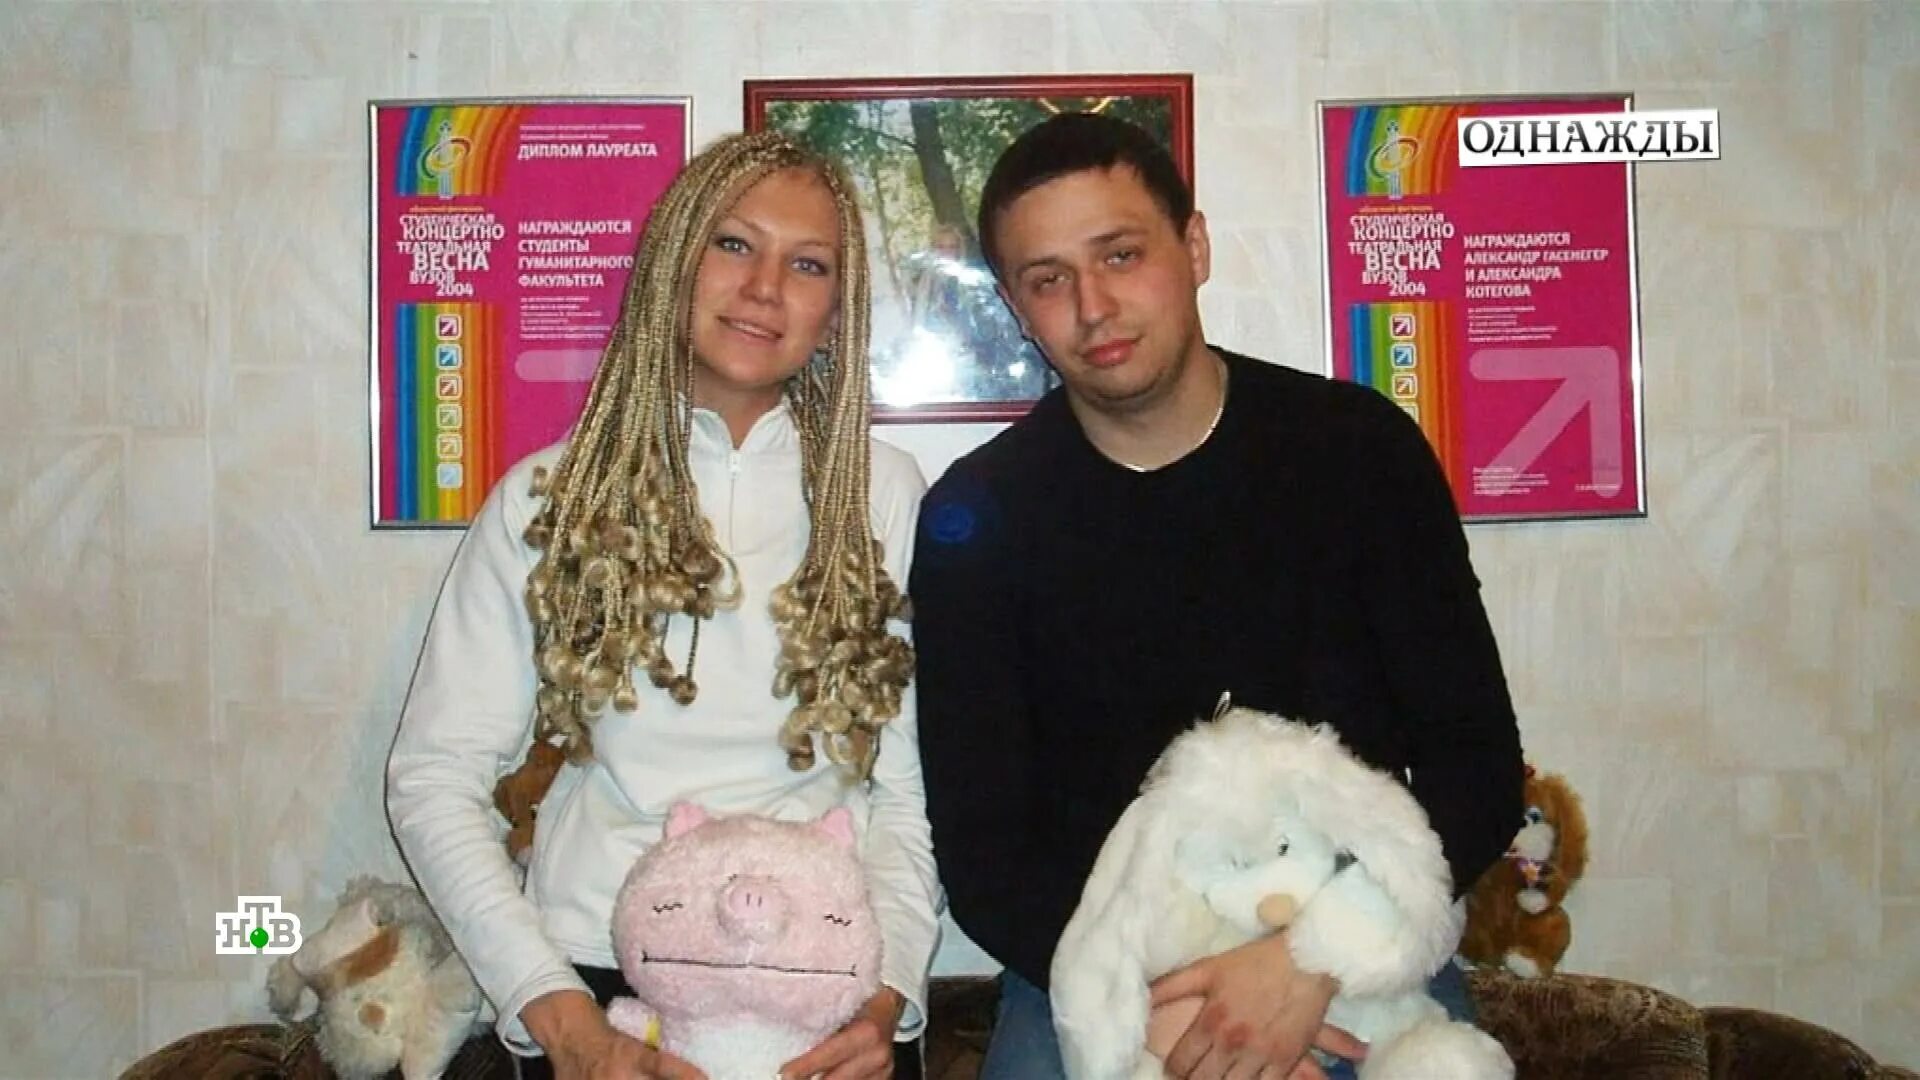 Жена Олега Верещагина. Жена Олега Верещагина фото. Верещагин с женой. Жена олега верещагина возраст